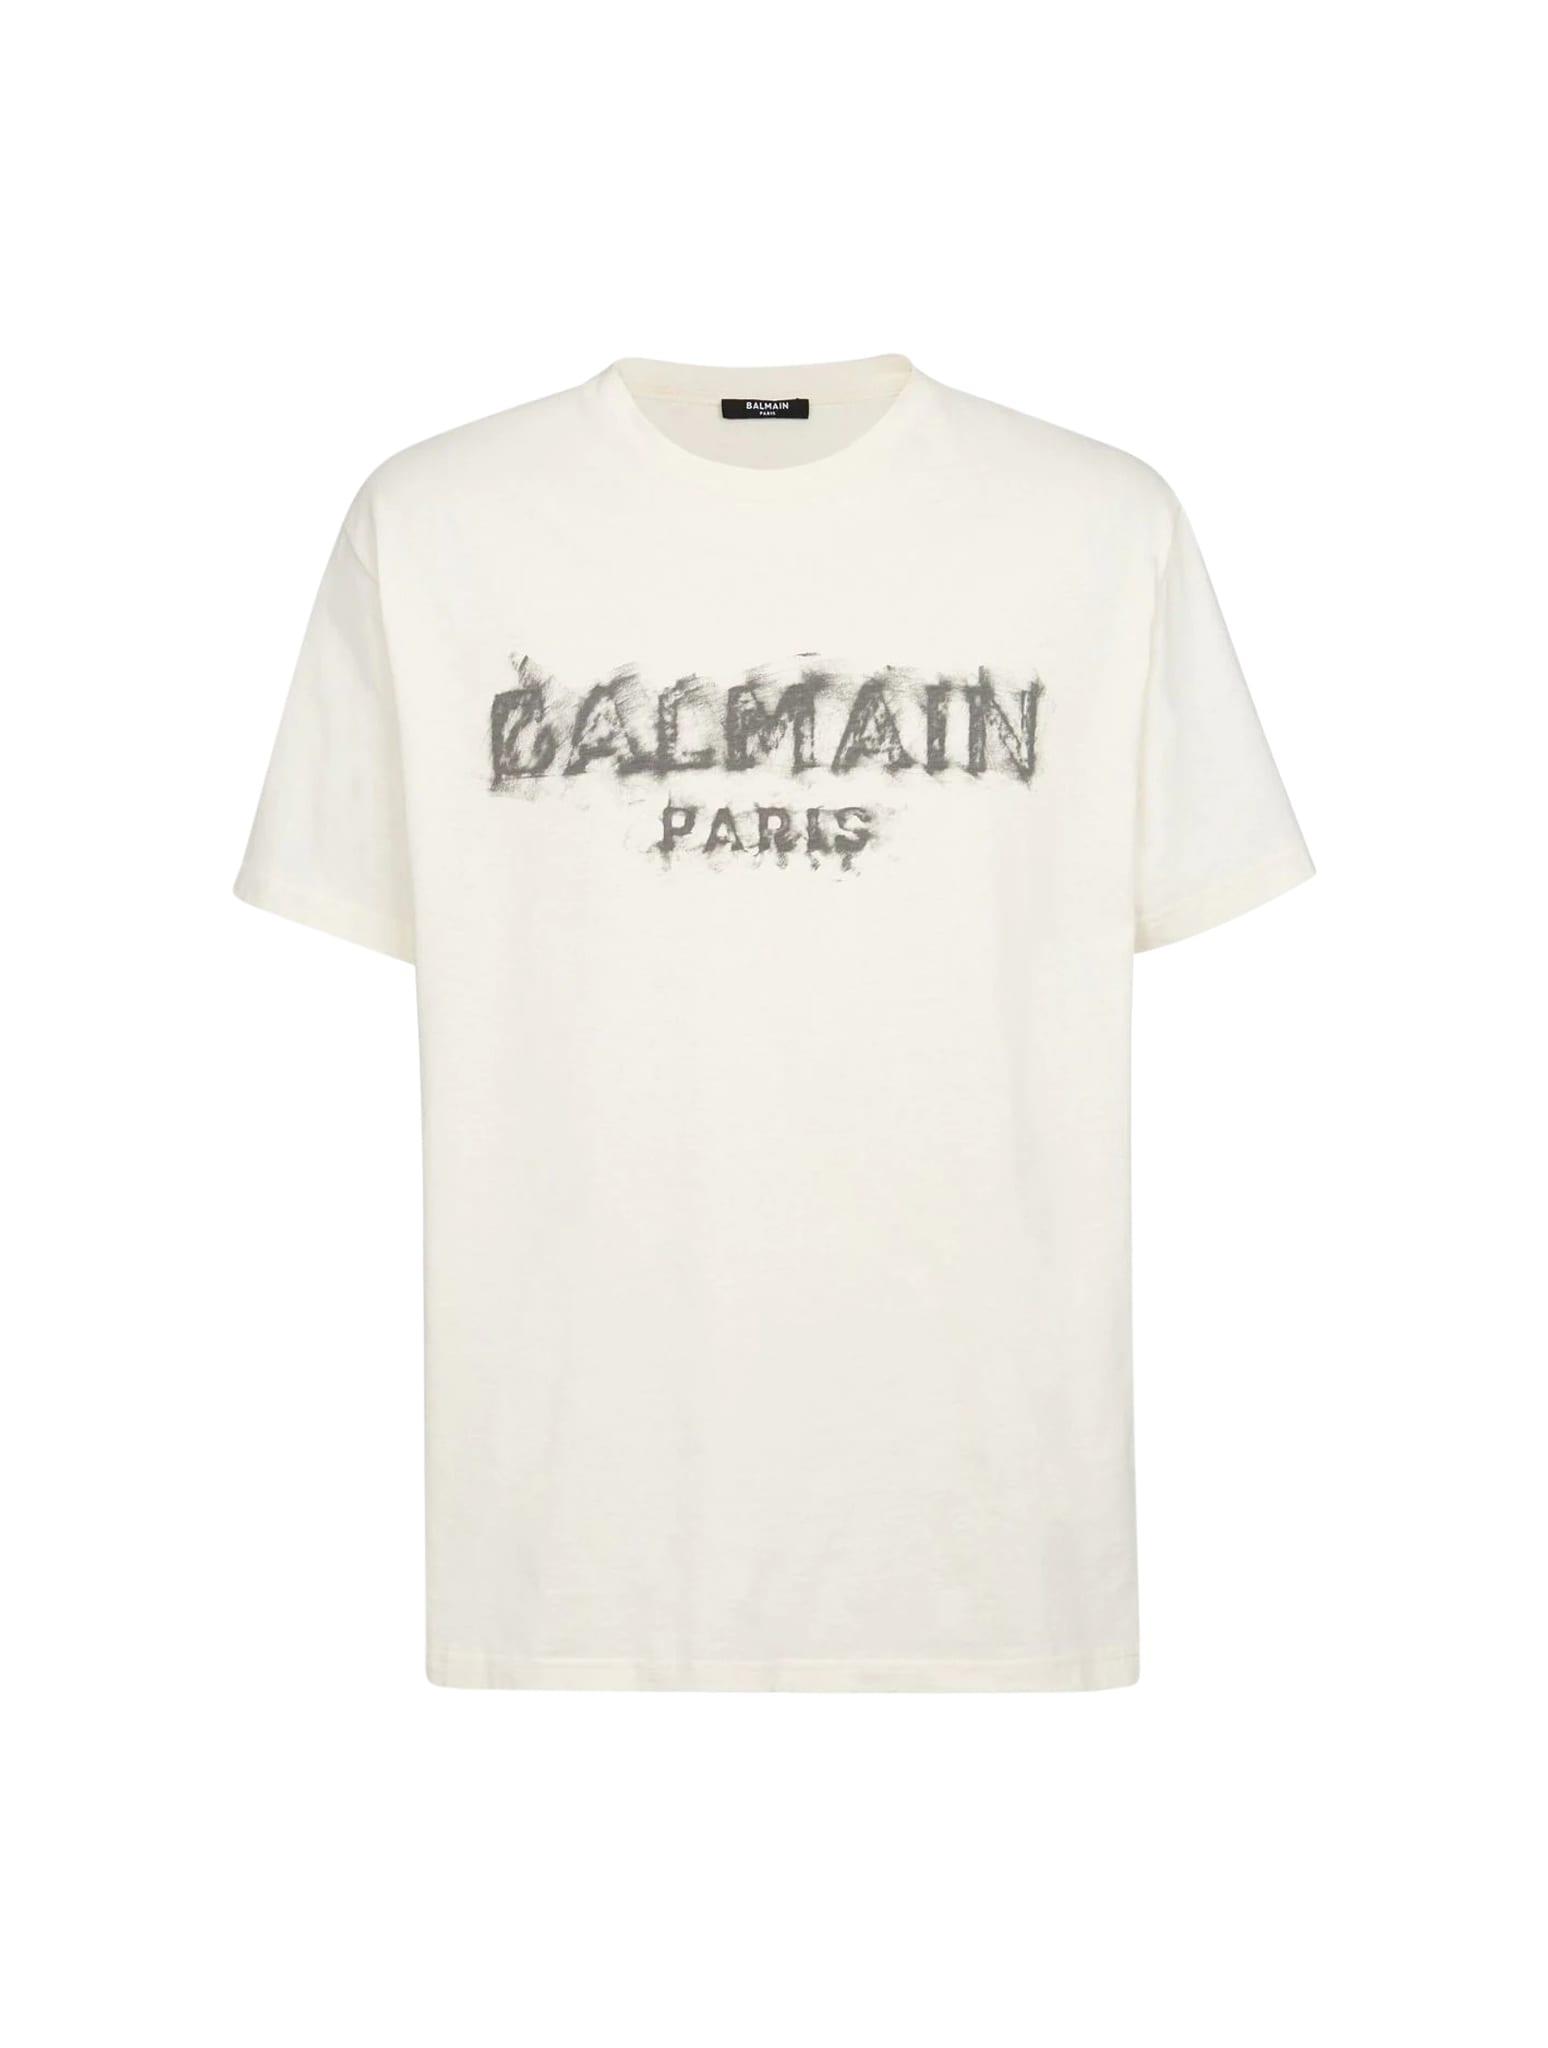 Balmain Charcoal T-shirt - Bulky Fit